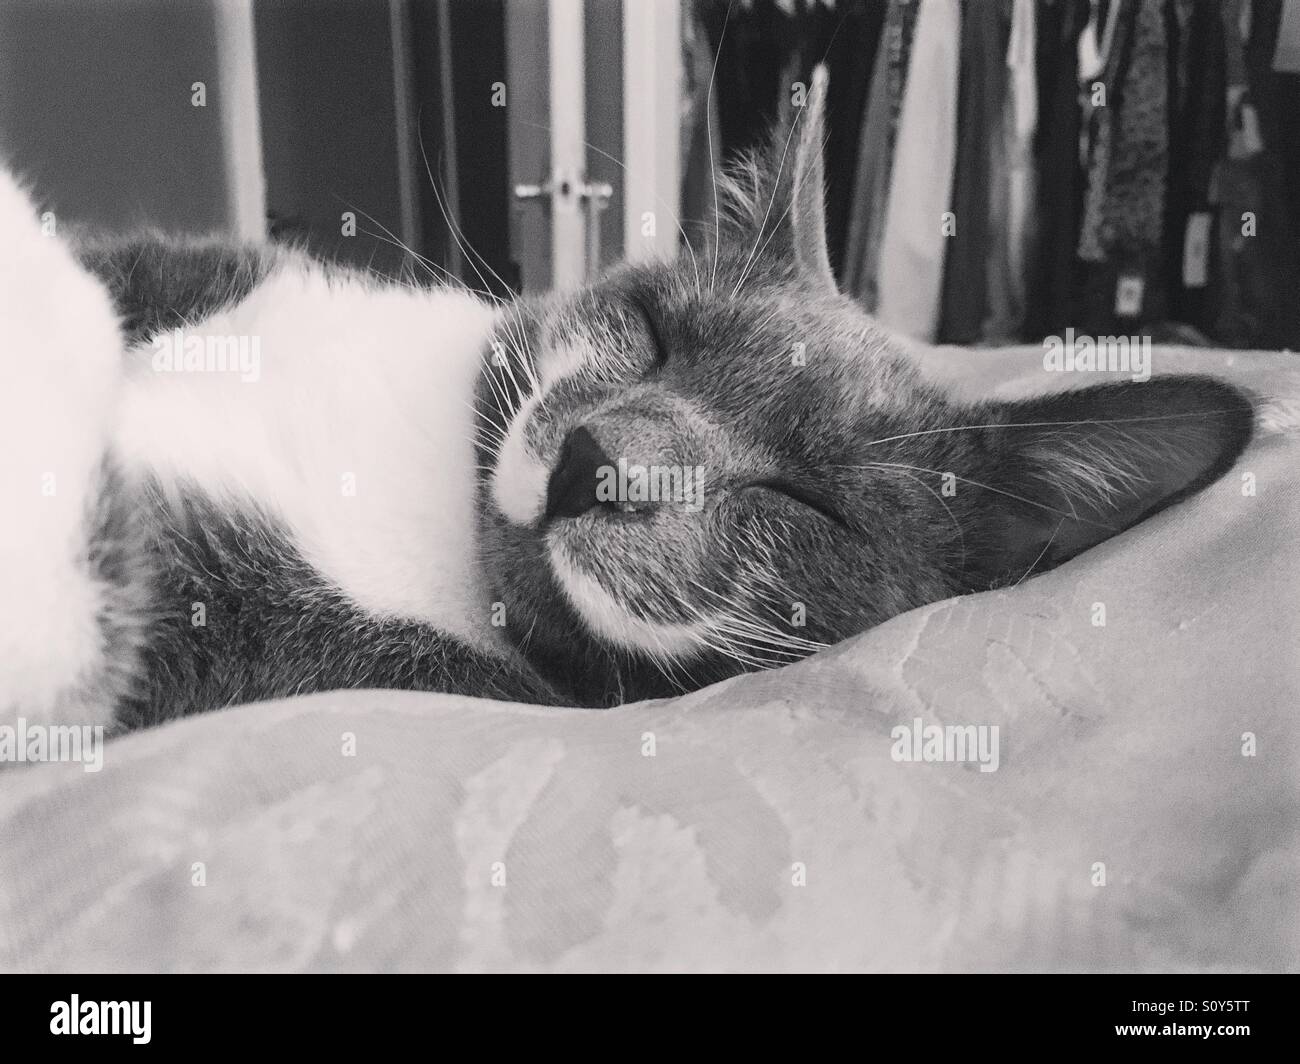 Mustache cat takes a cat nap Stock Photo